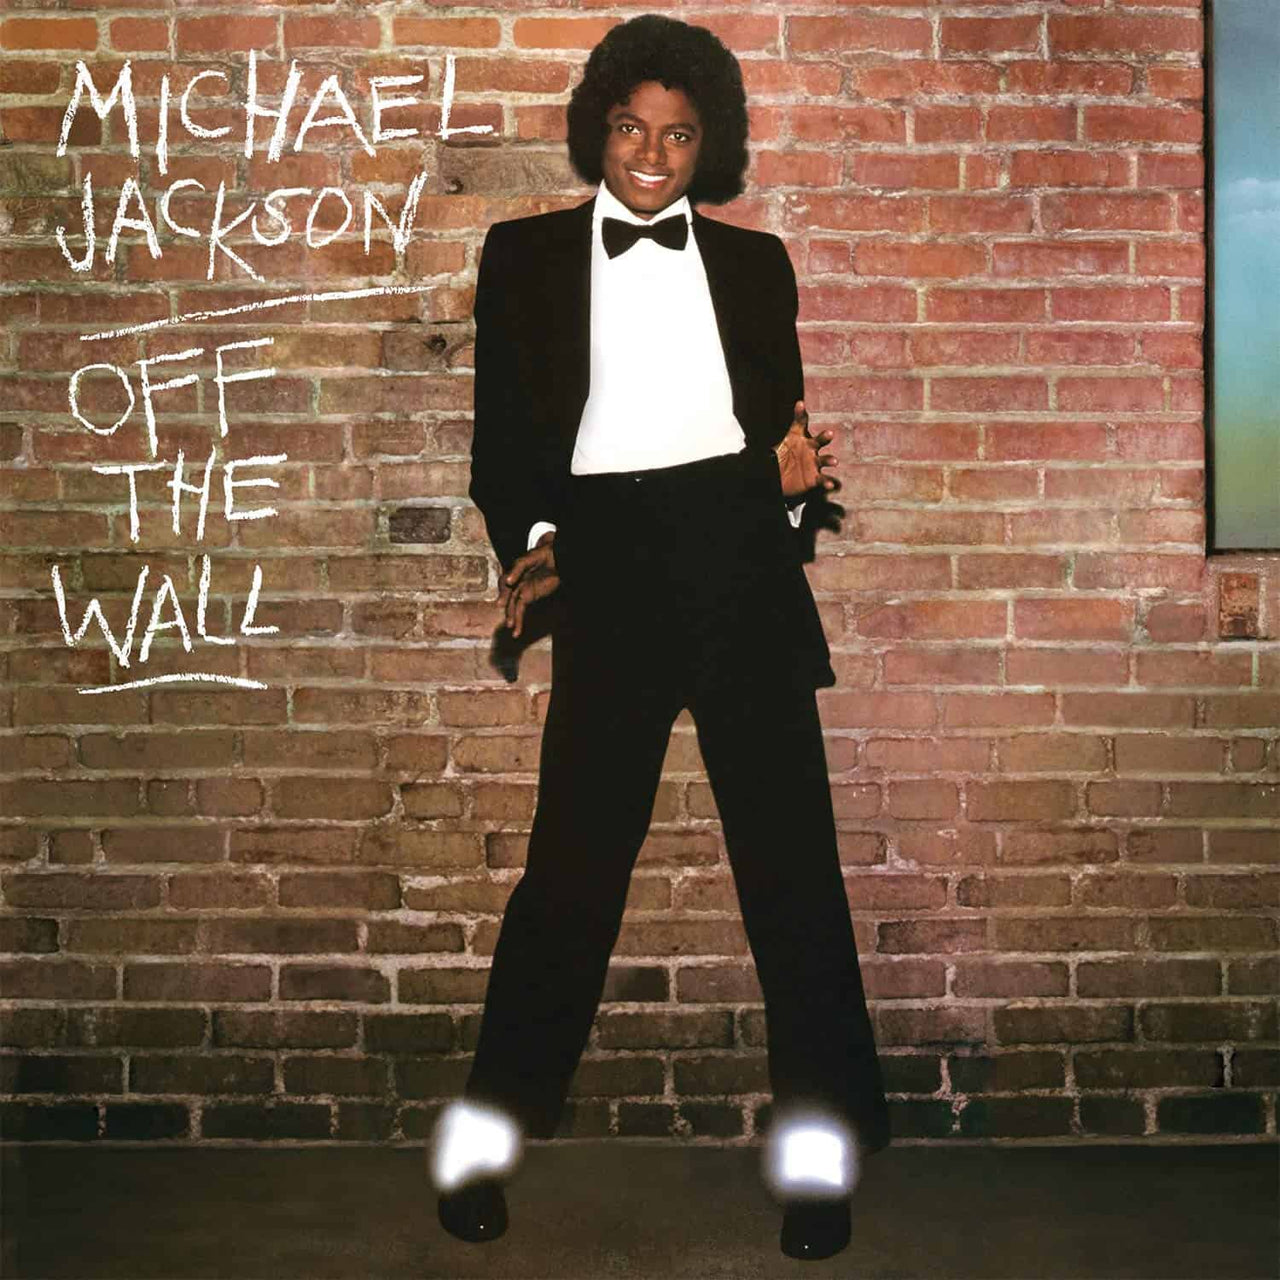 MICHAEL JACKSON - OFF THE WALL (1LP)